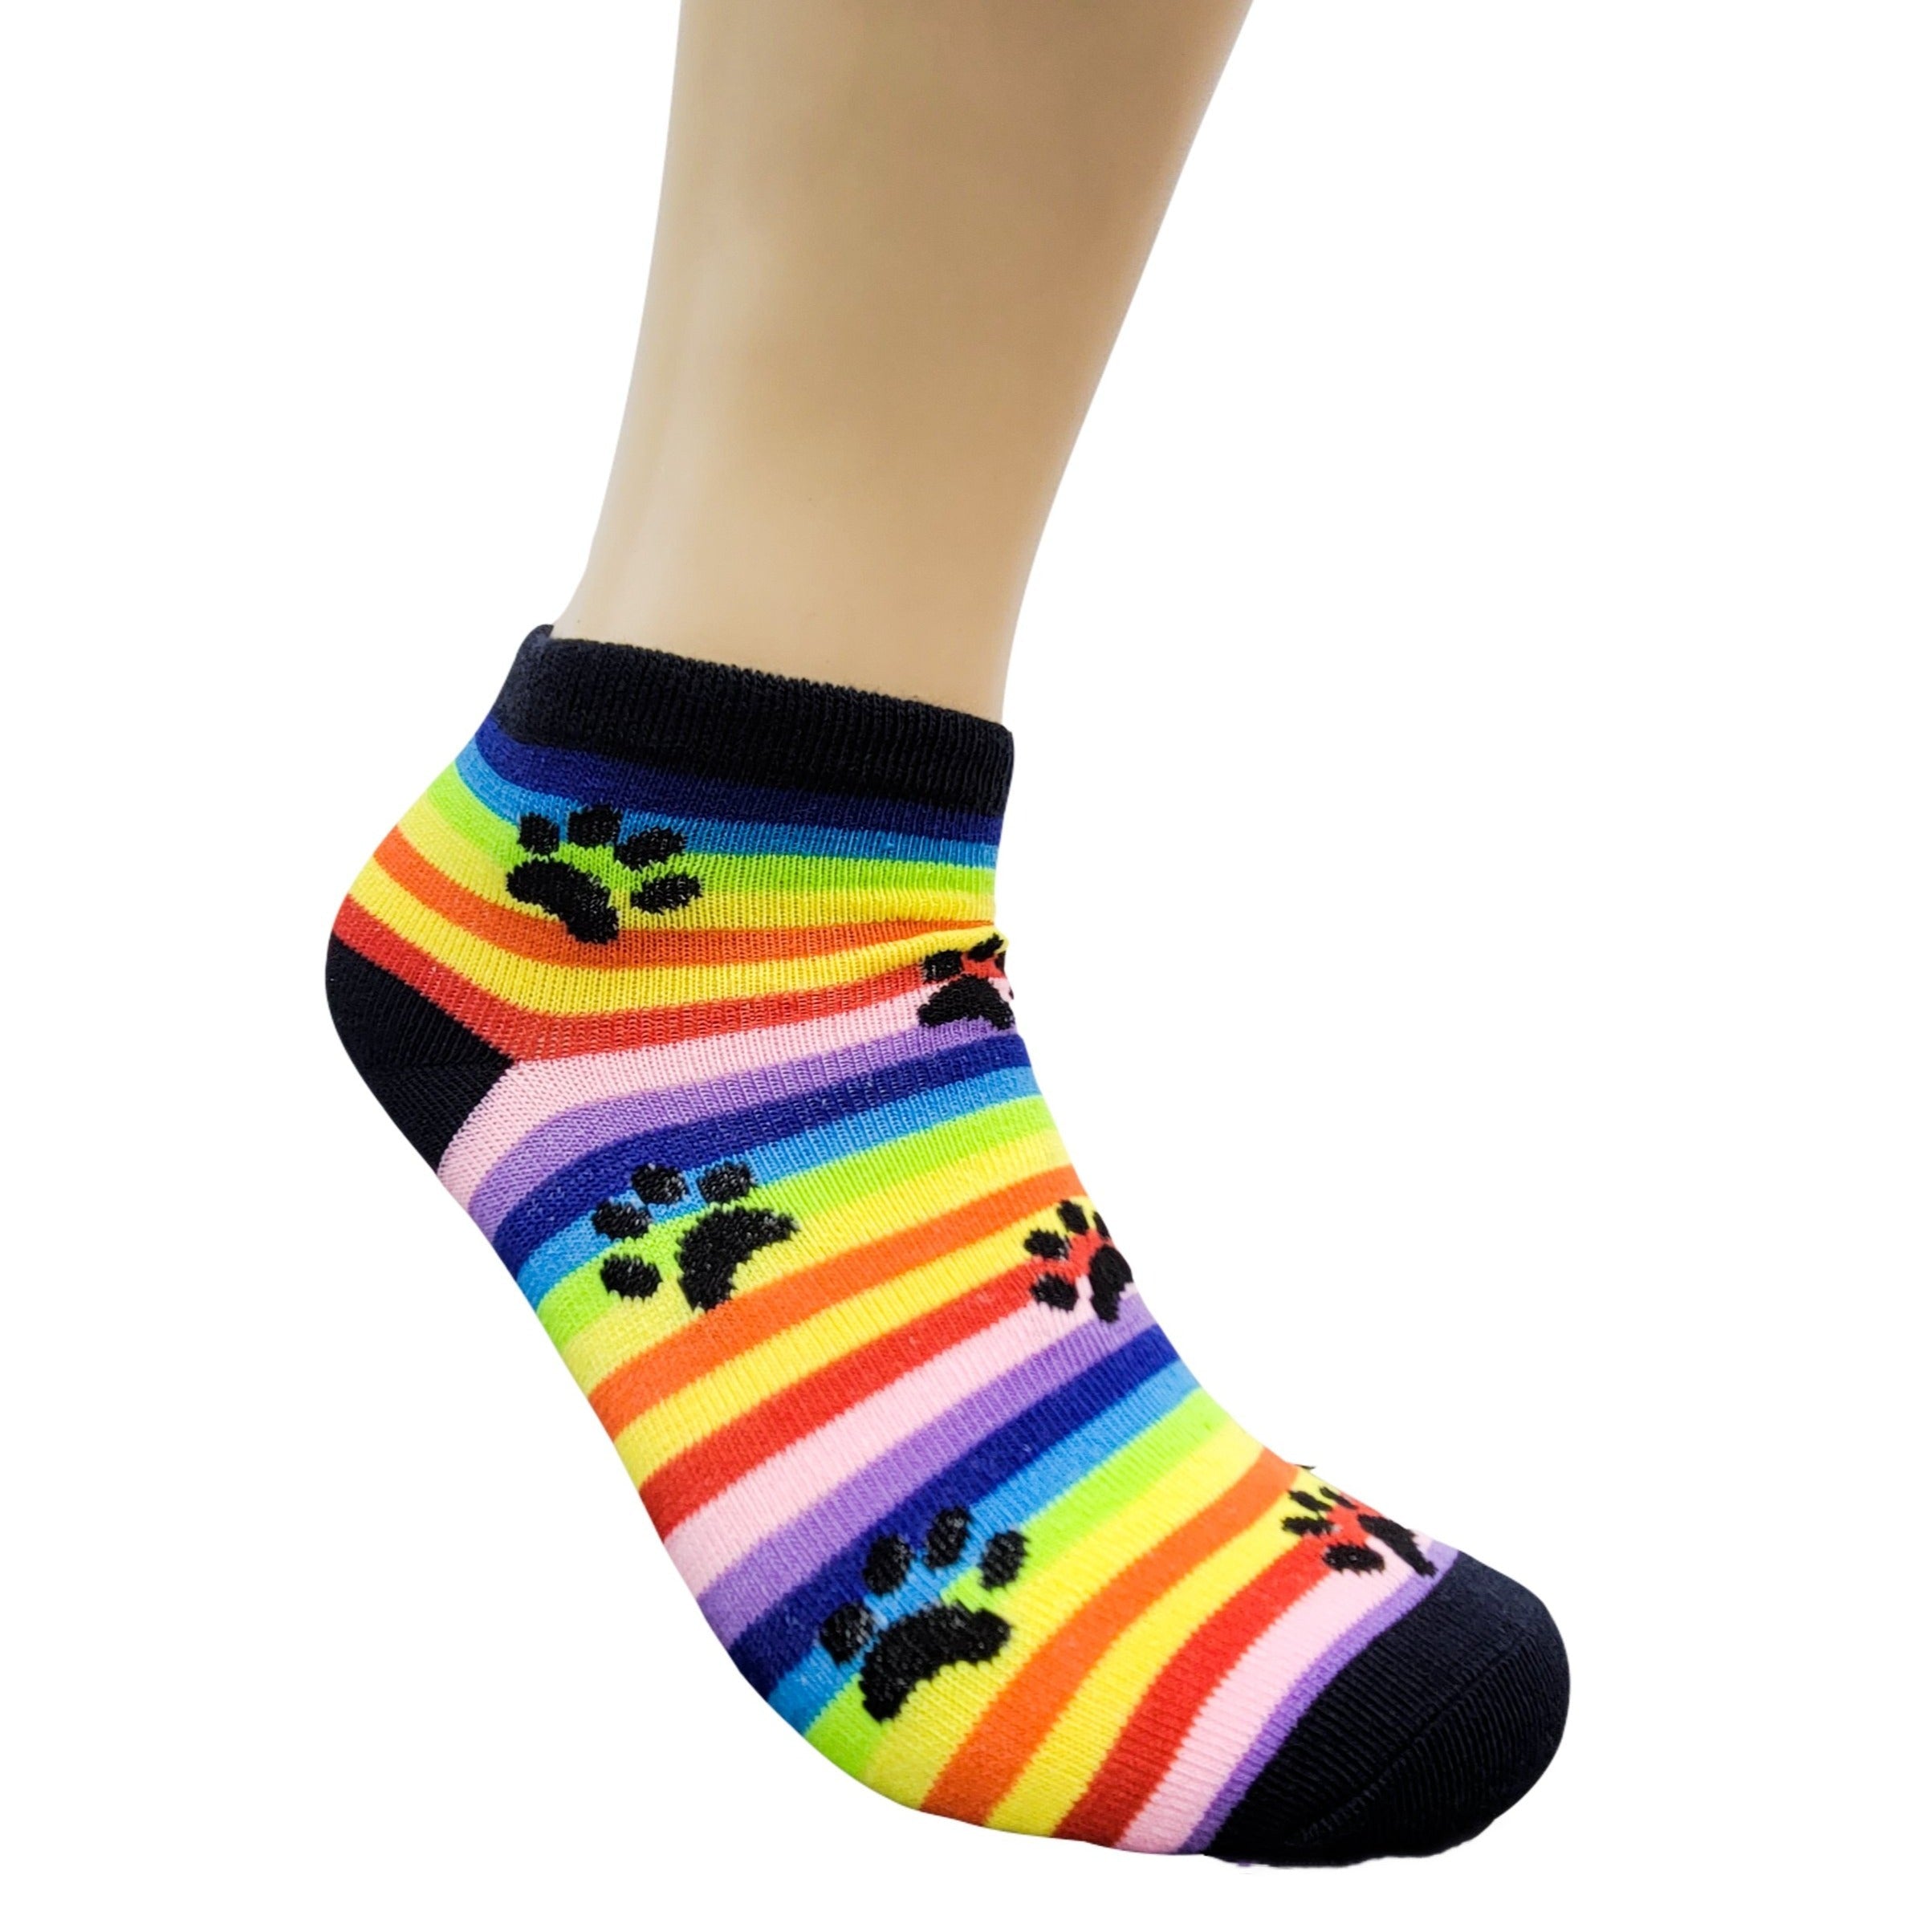 Rainbow Striped with Animal Paw Prints Ankle Socks (Adult Medium)